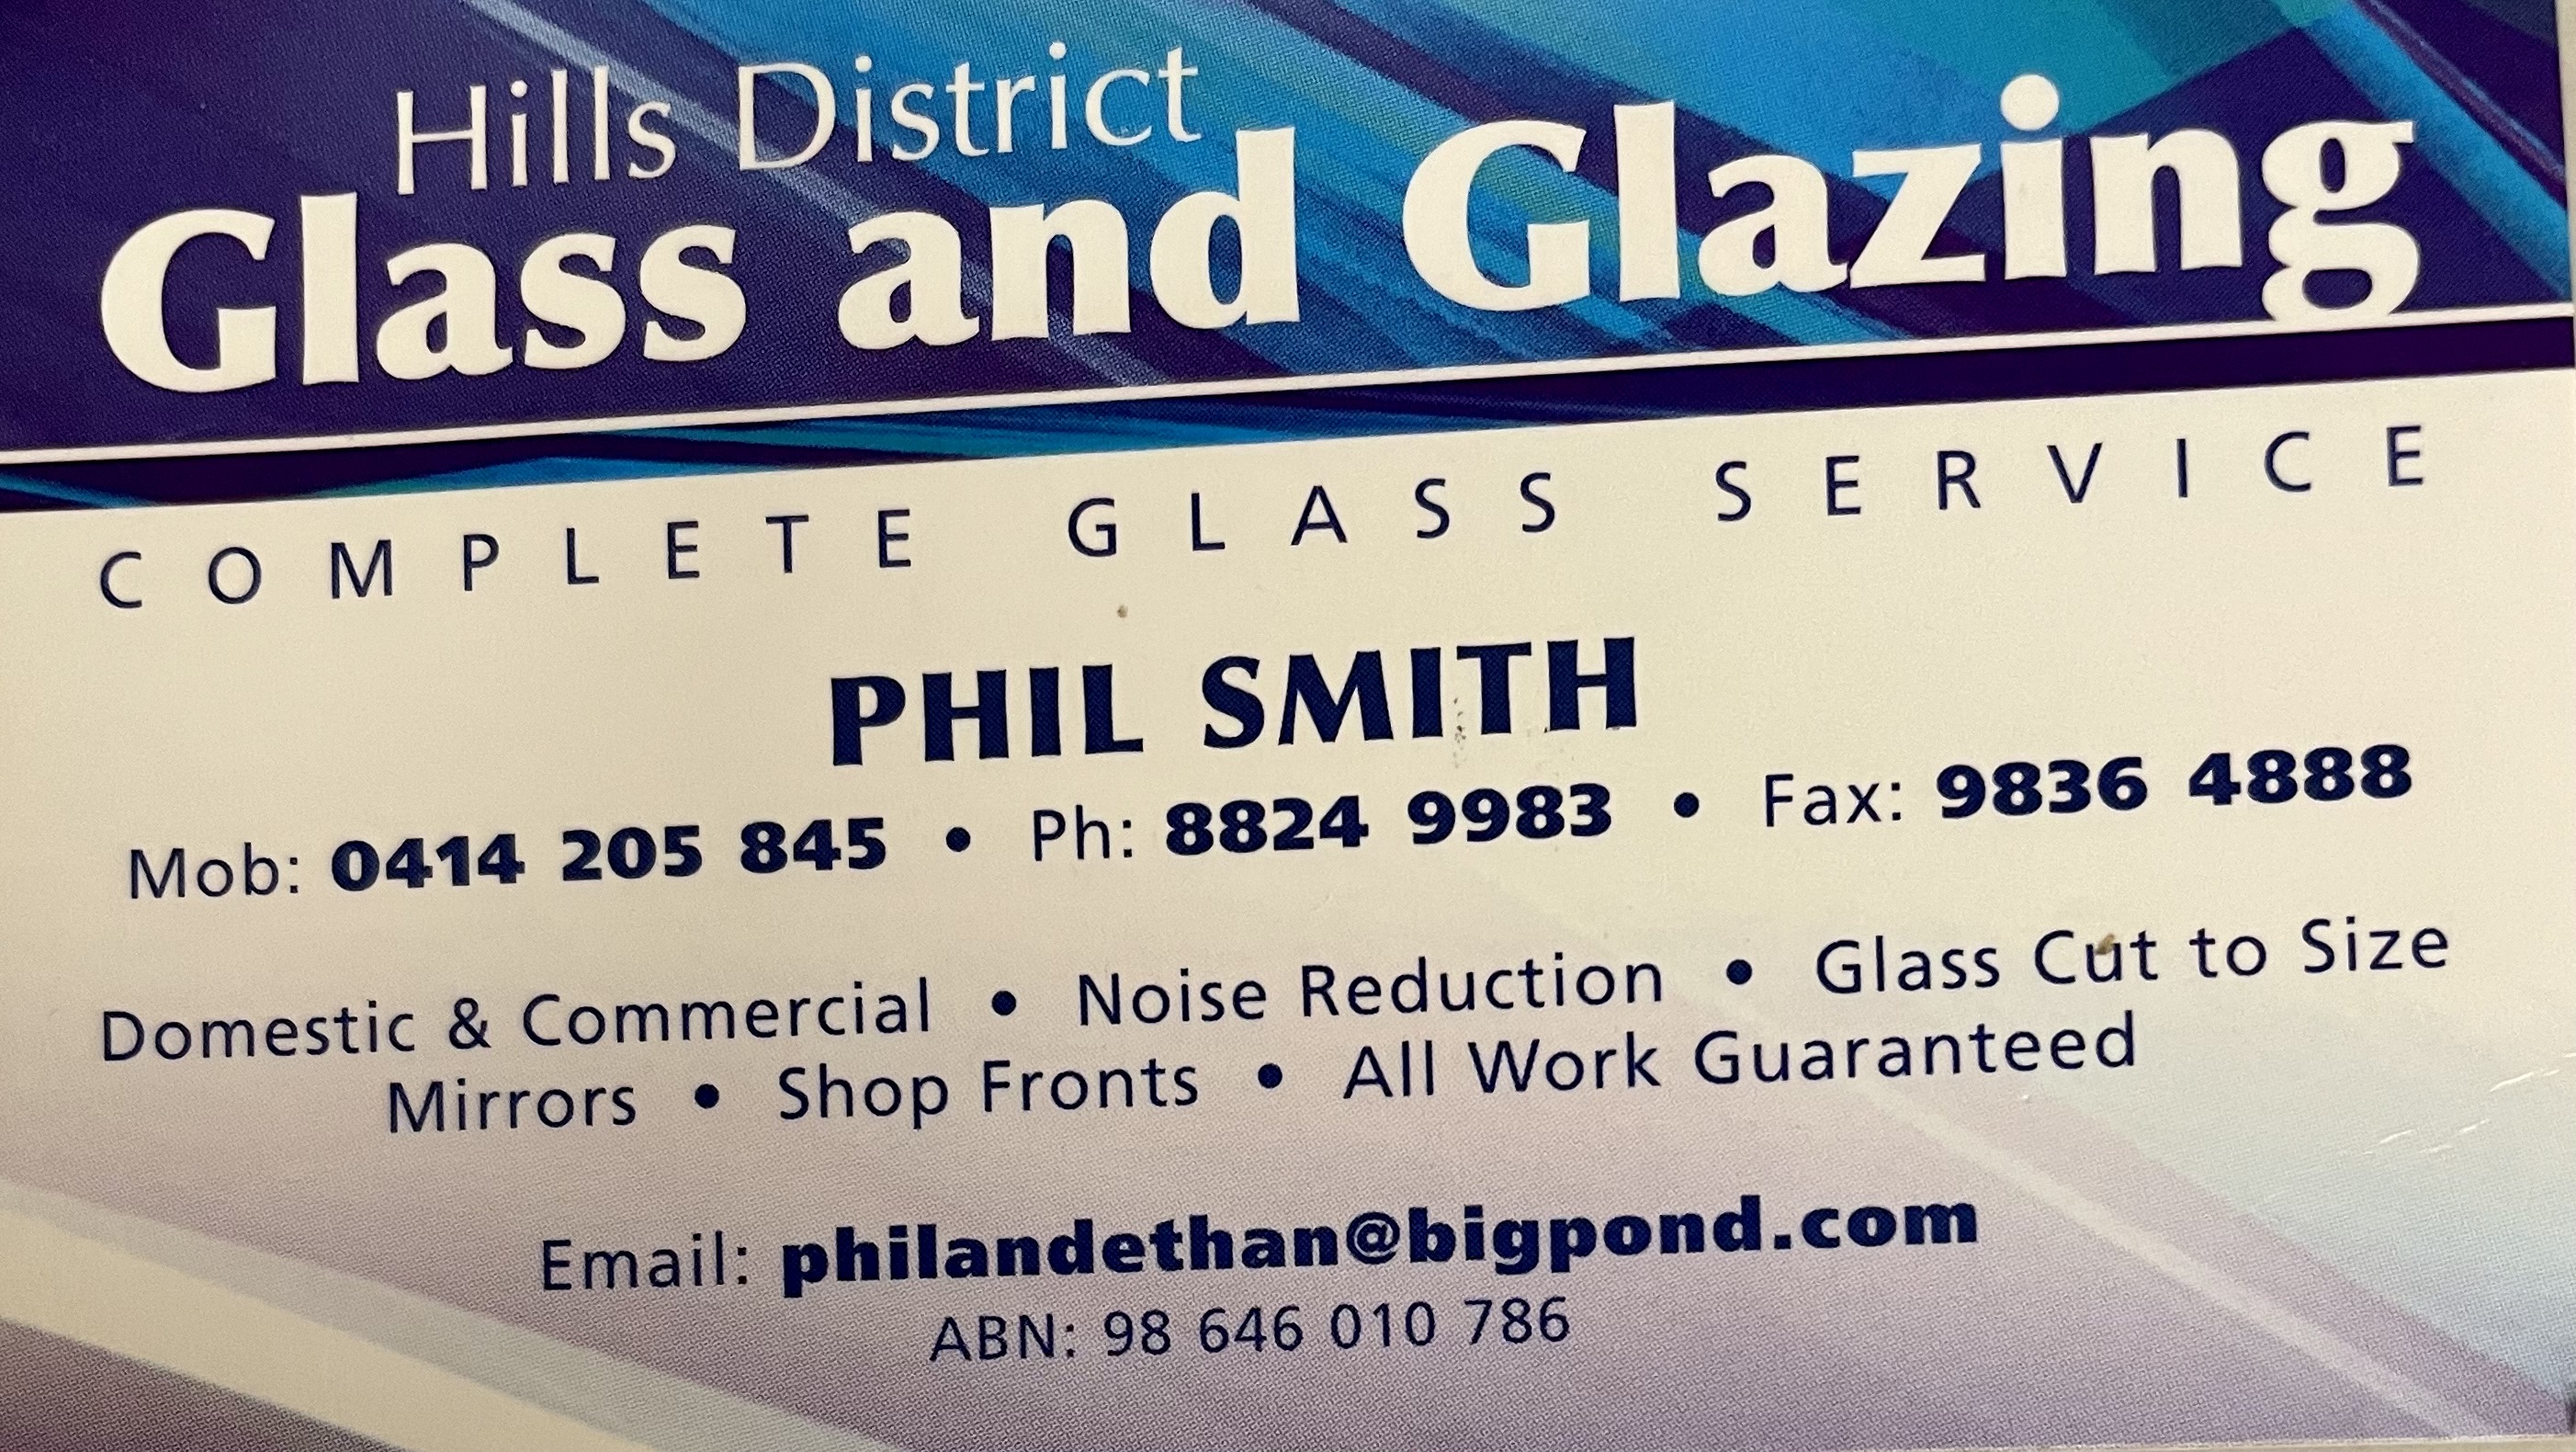 Hills Disctrict Glass & Glazing